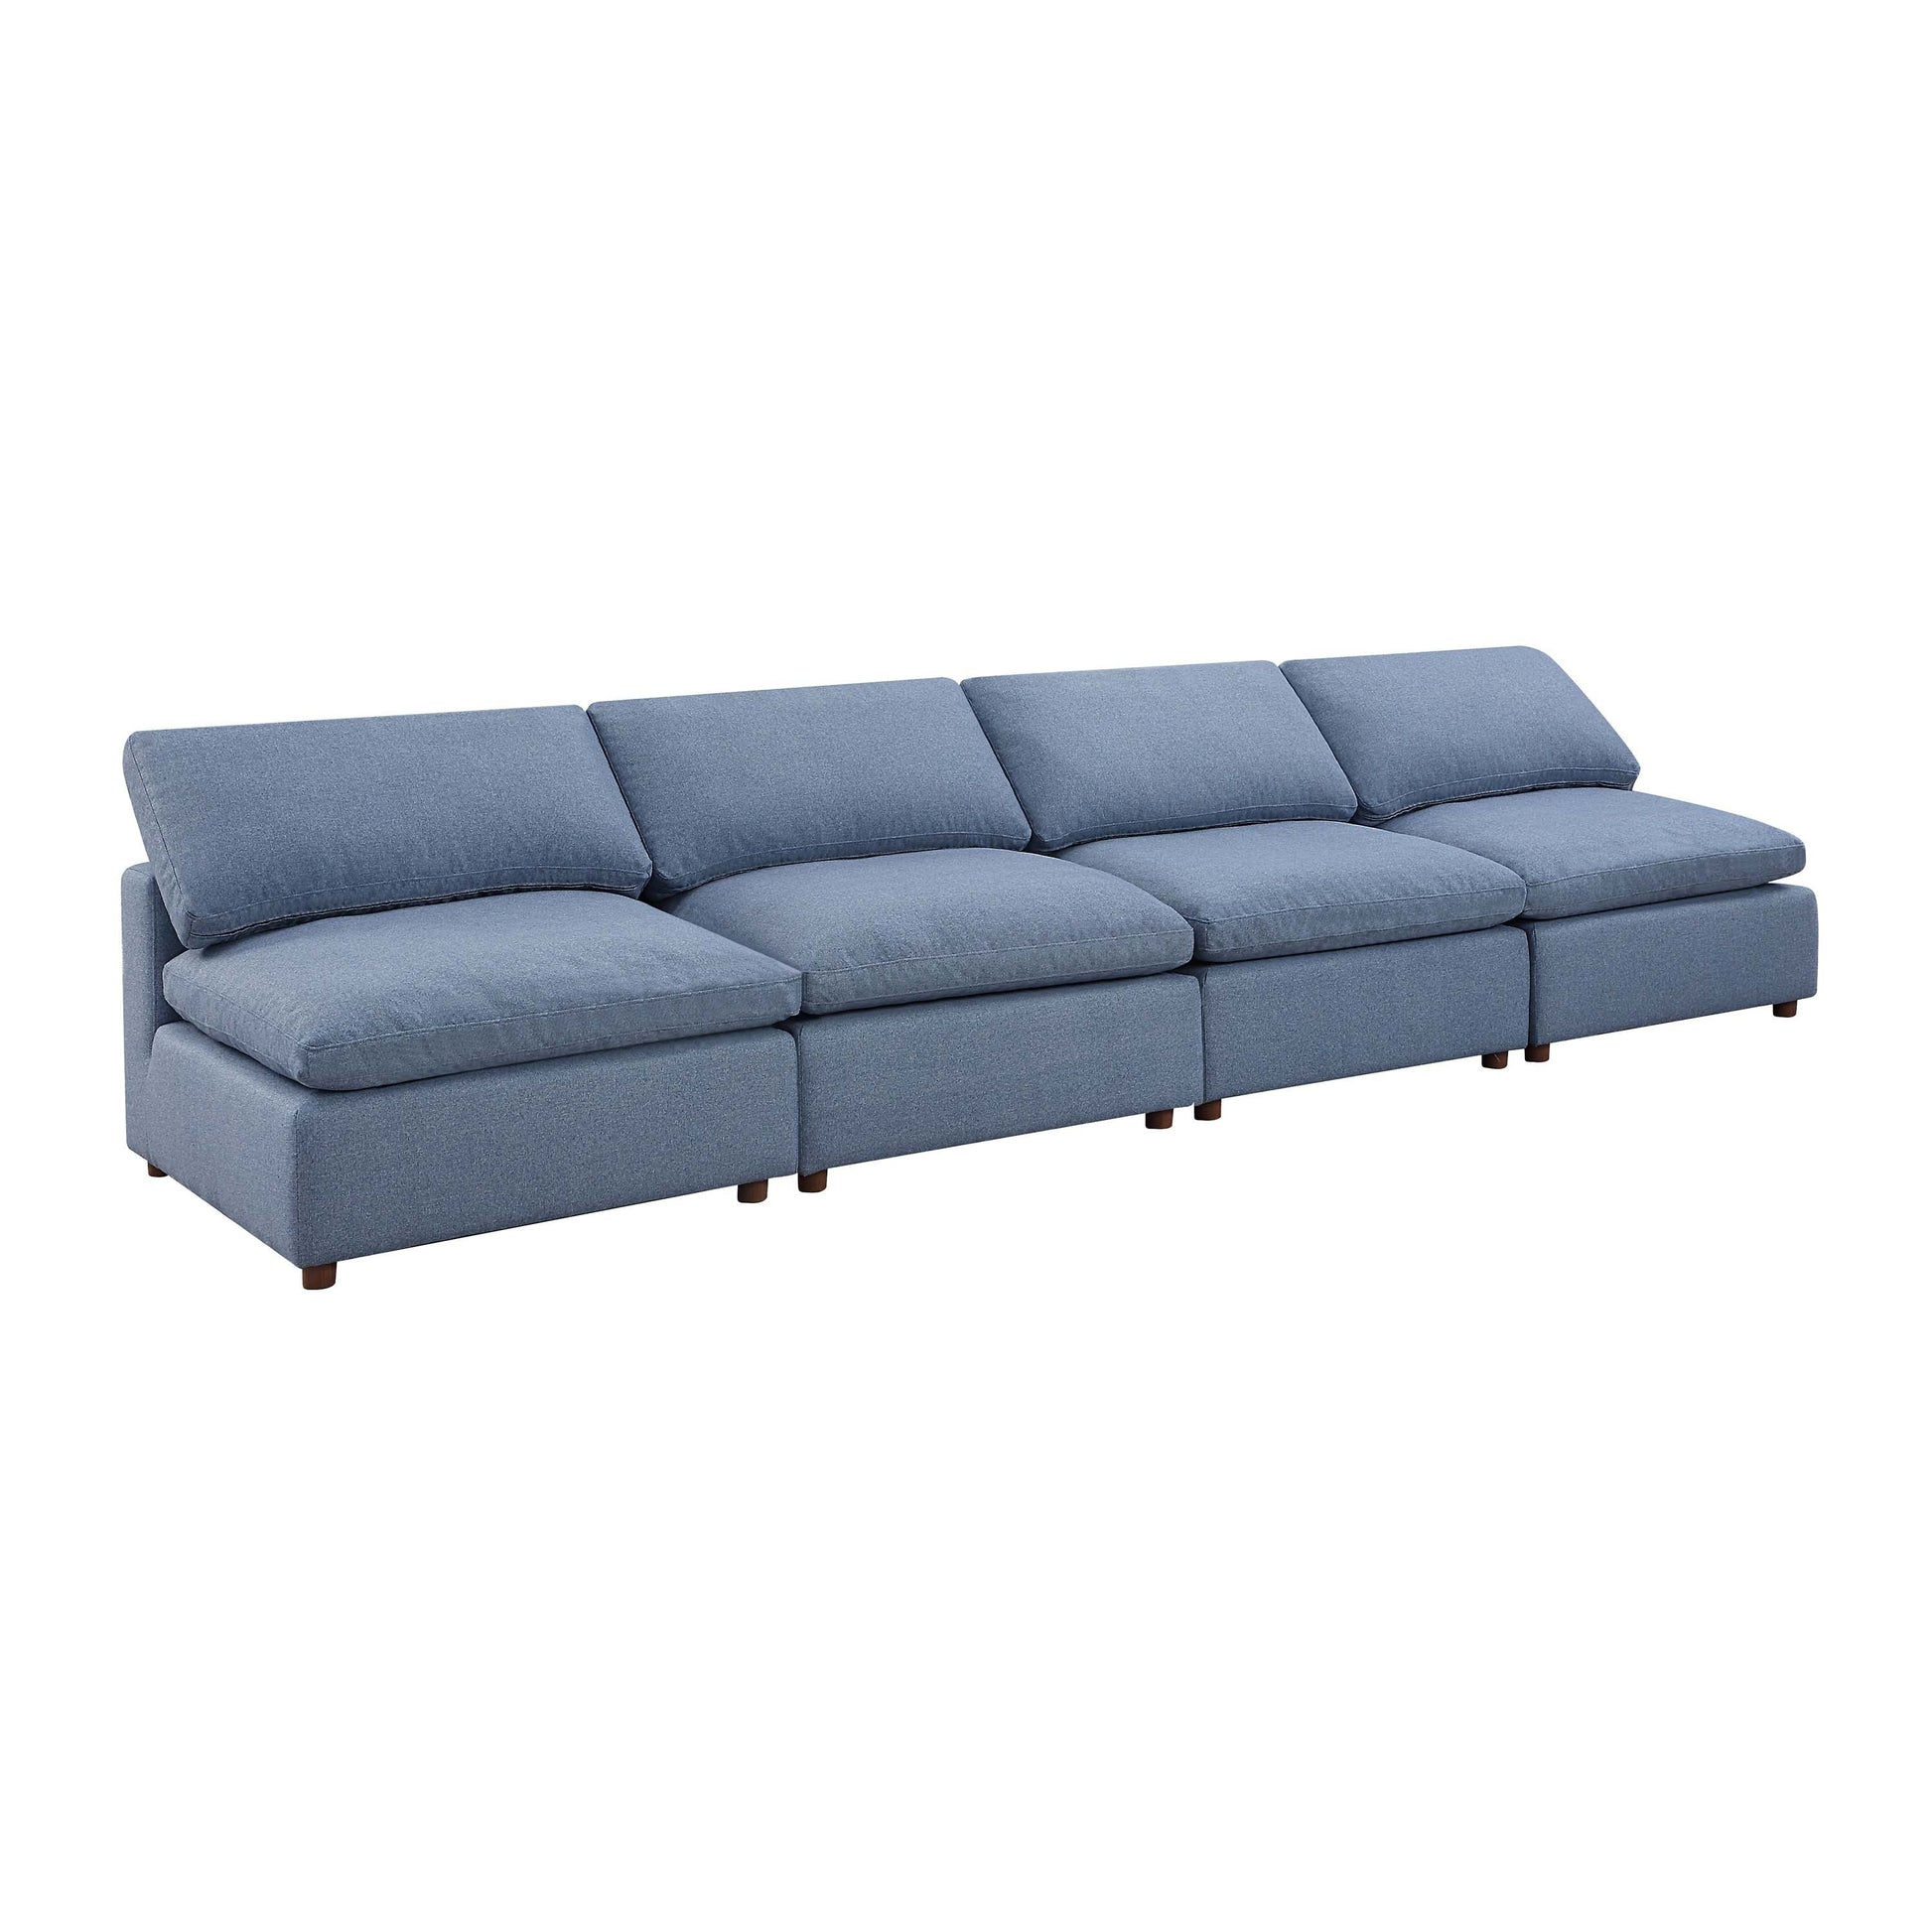 Modern Modular Sectional Sofa Set, Self-customization Design Sofa, Blue - Enova Luxe Home Store